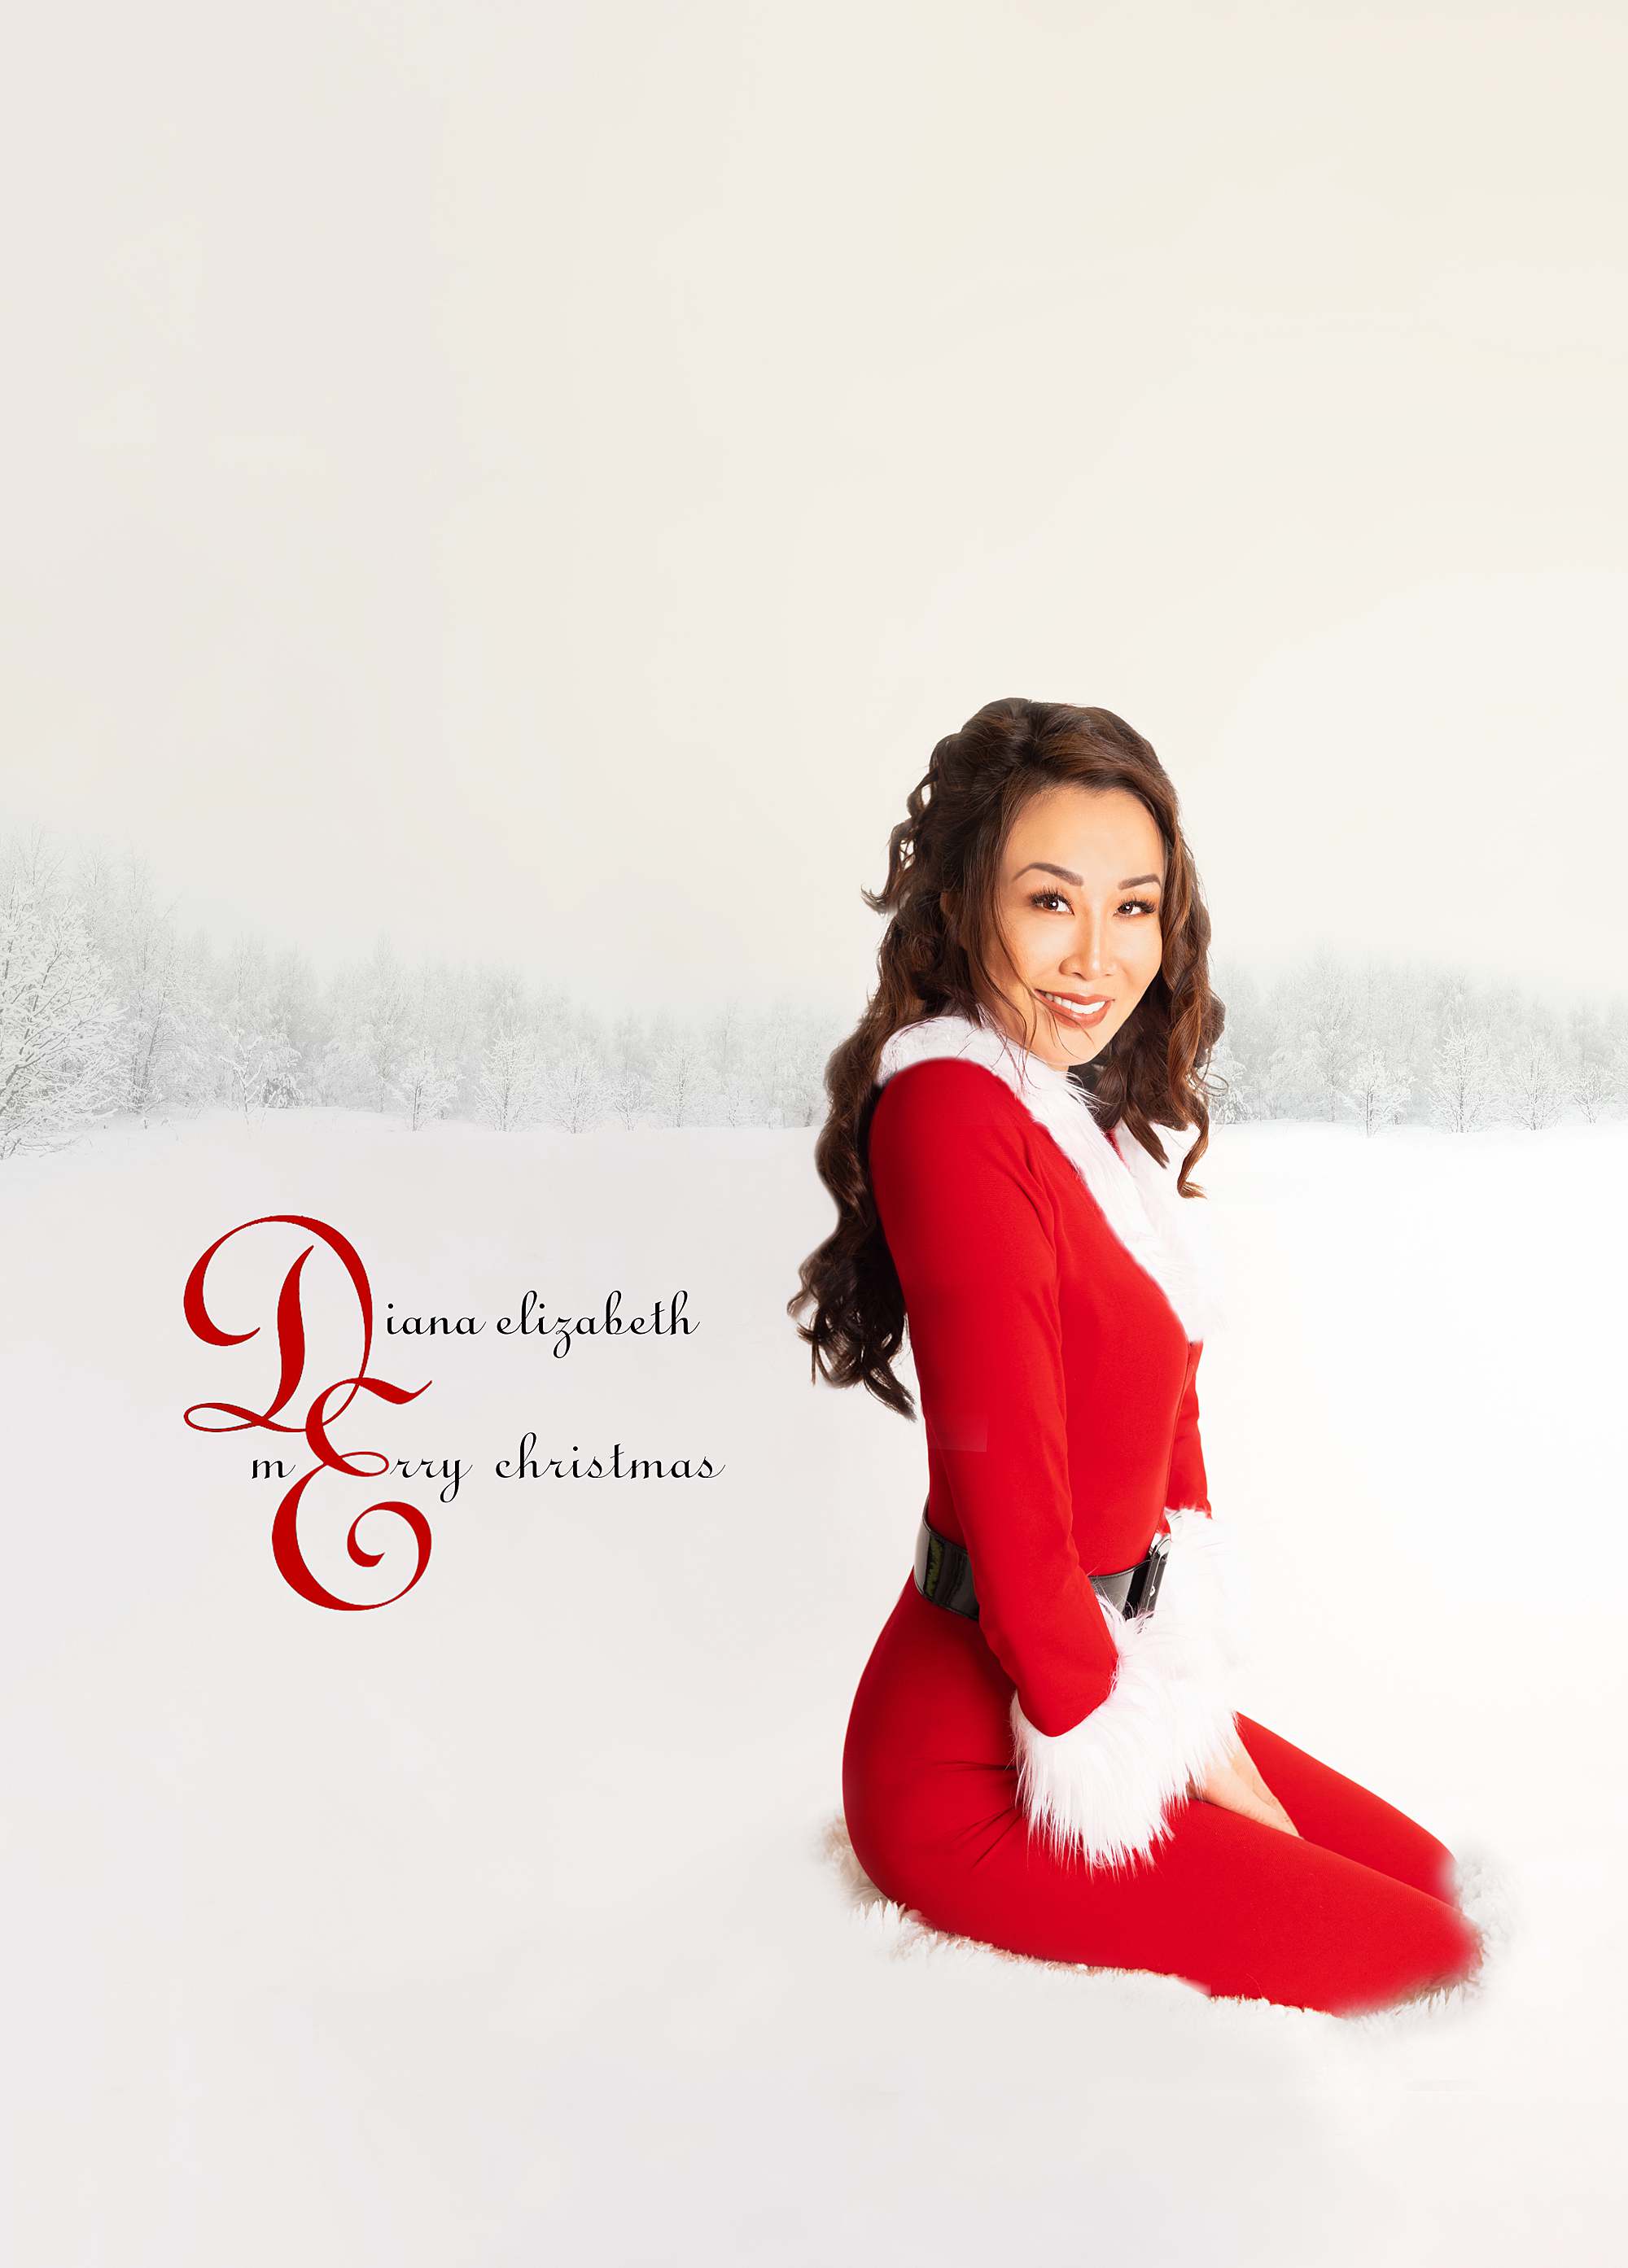 Mariah Carey inspired Christmas card album